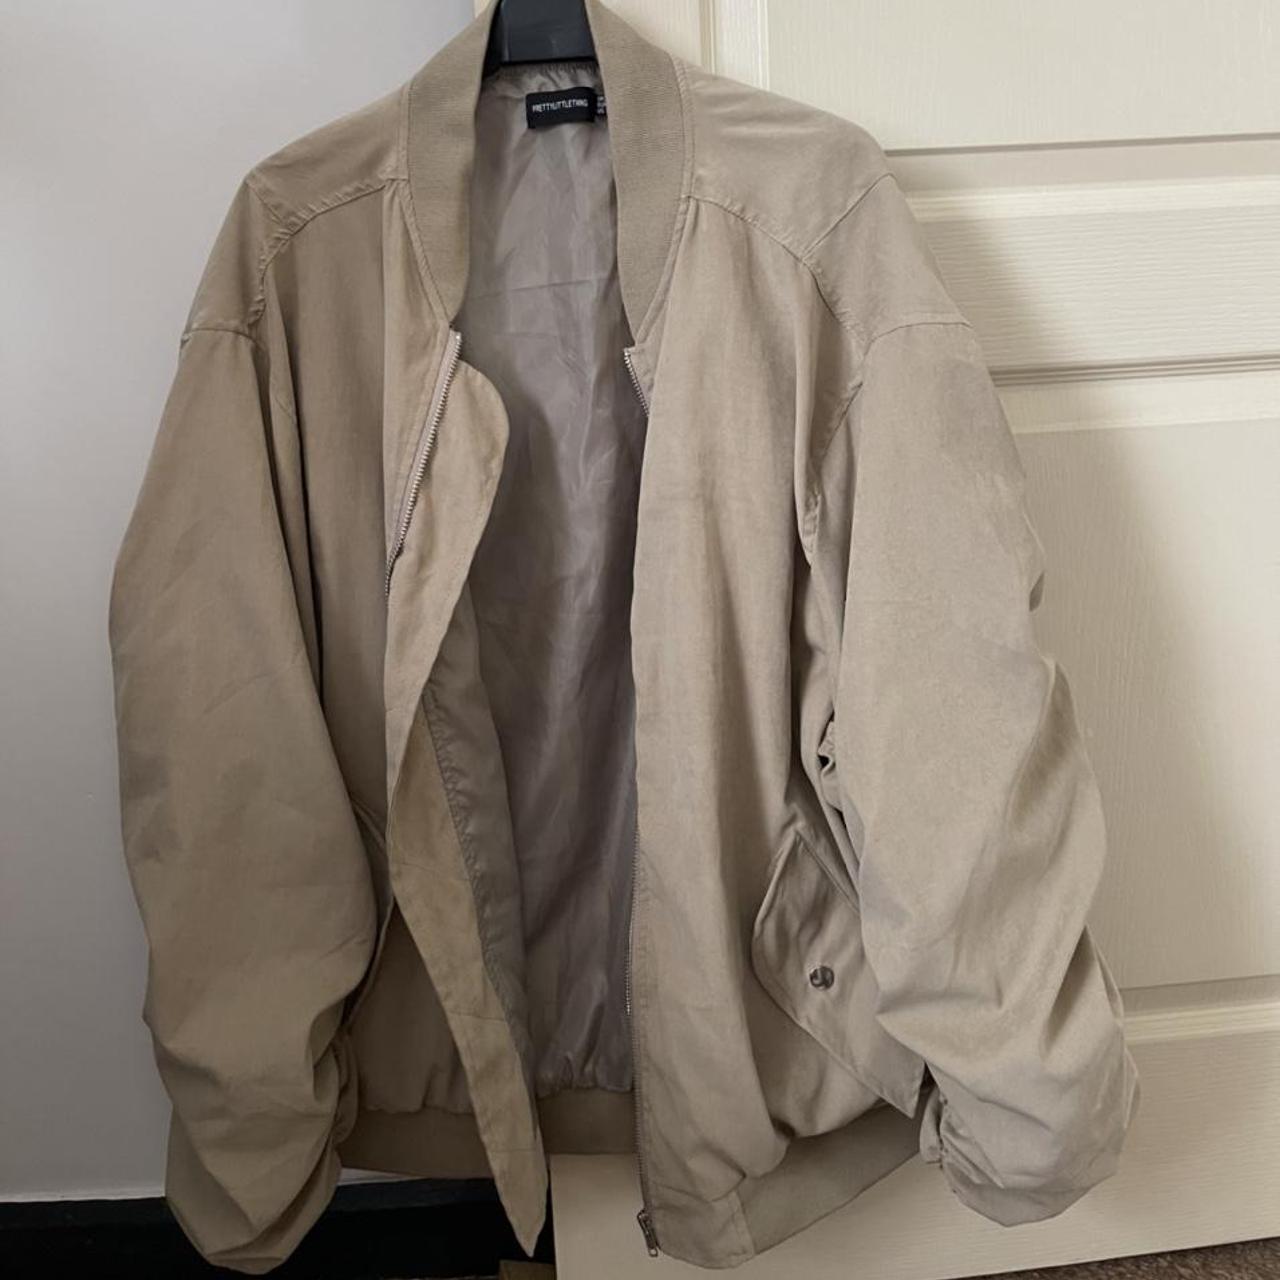 Oversized bomber jacket, worn once, size 8 - Depop